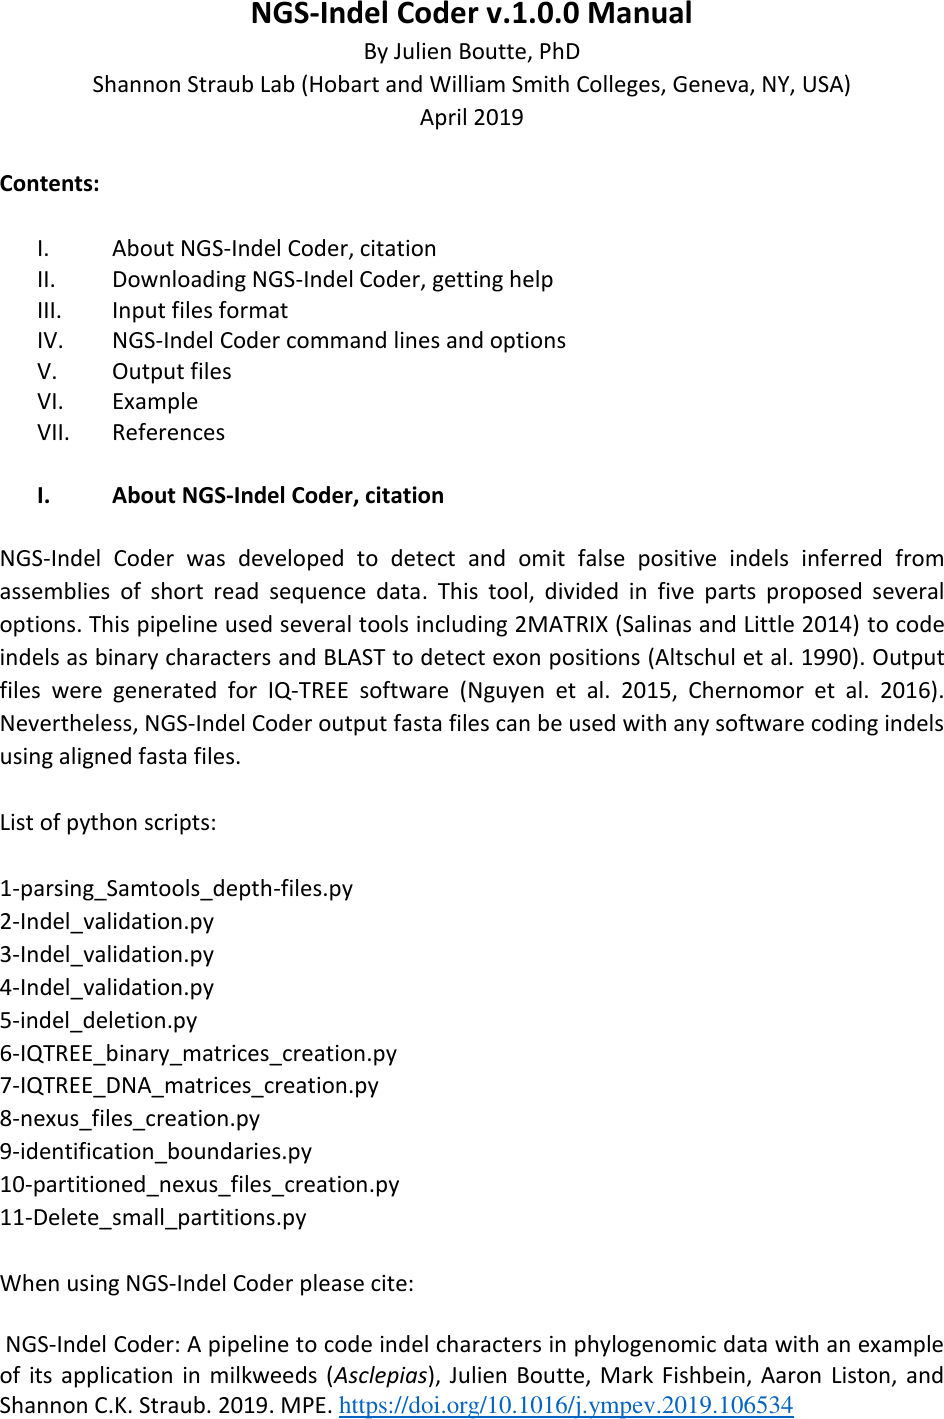 Page 1 of 10 - NGS-Indel Coder Manual